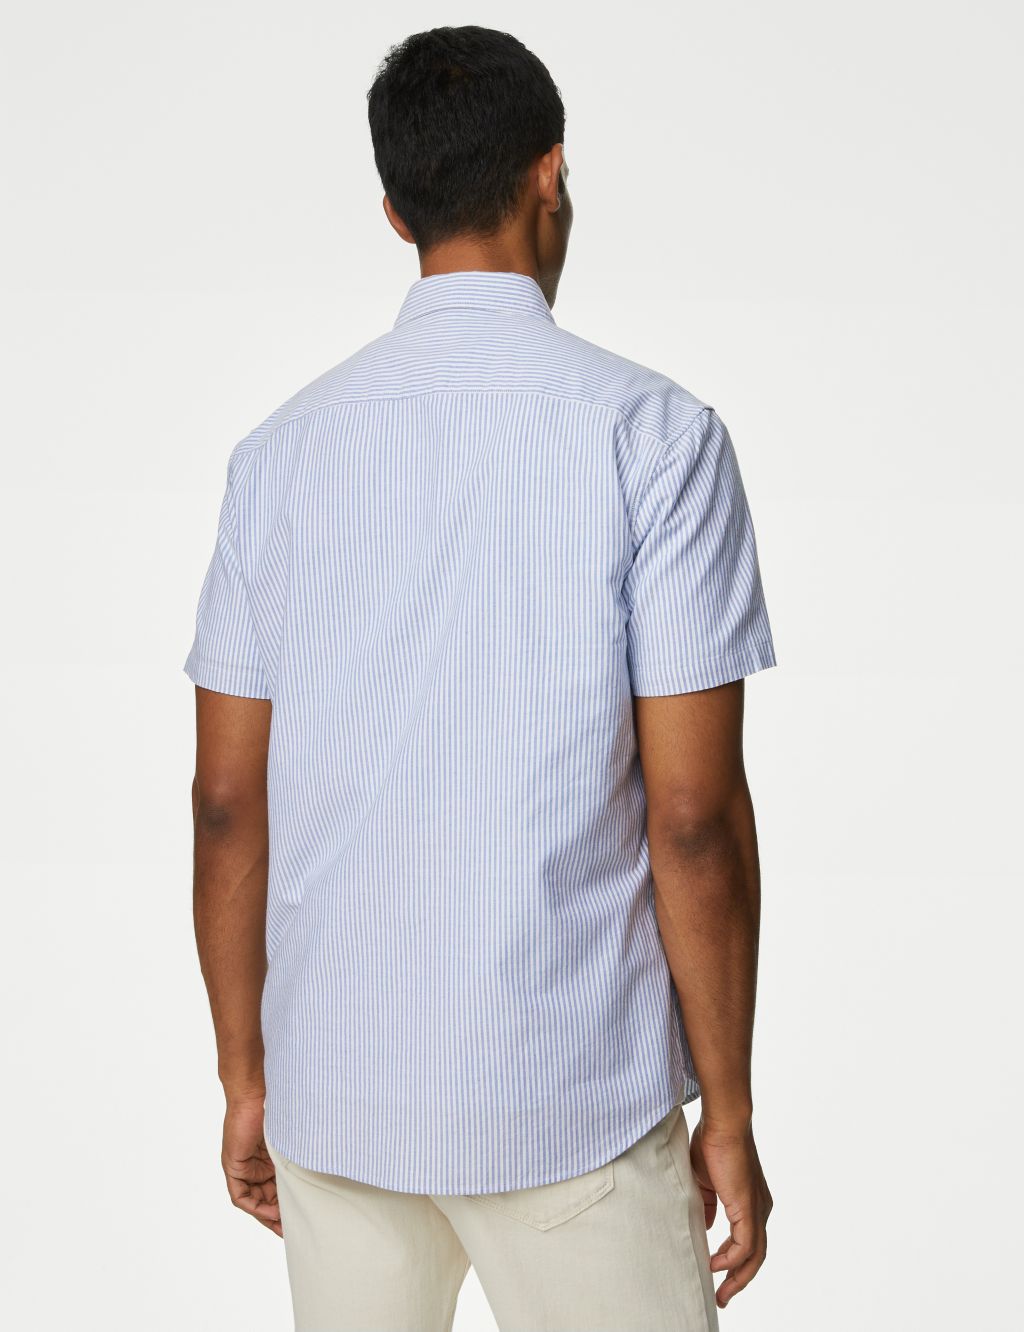 Pure Cotton Striped Oxford Shirt image 4